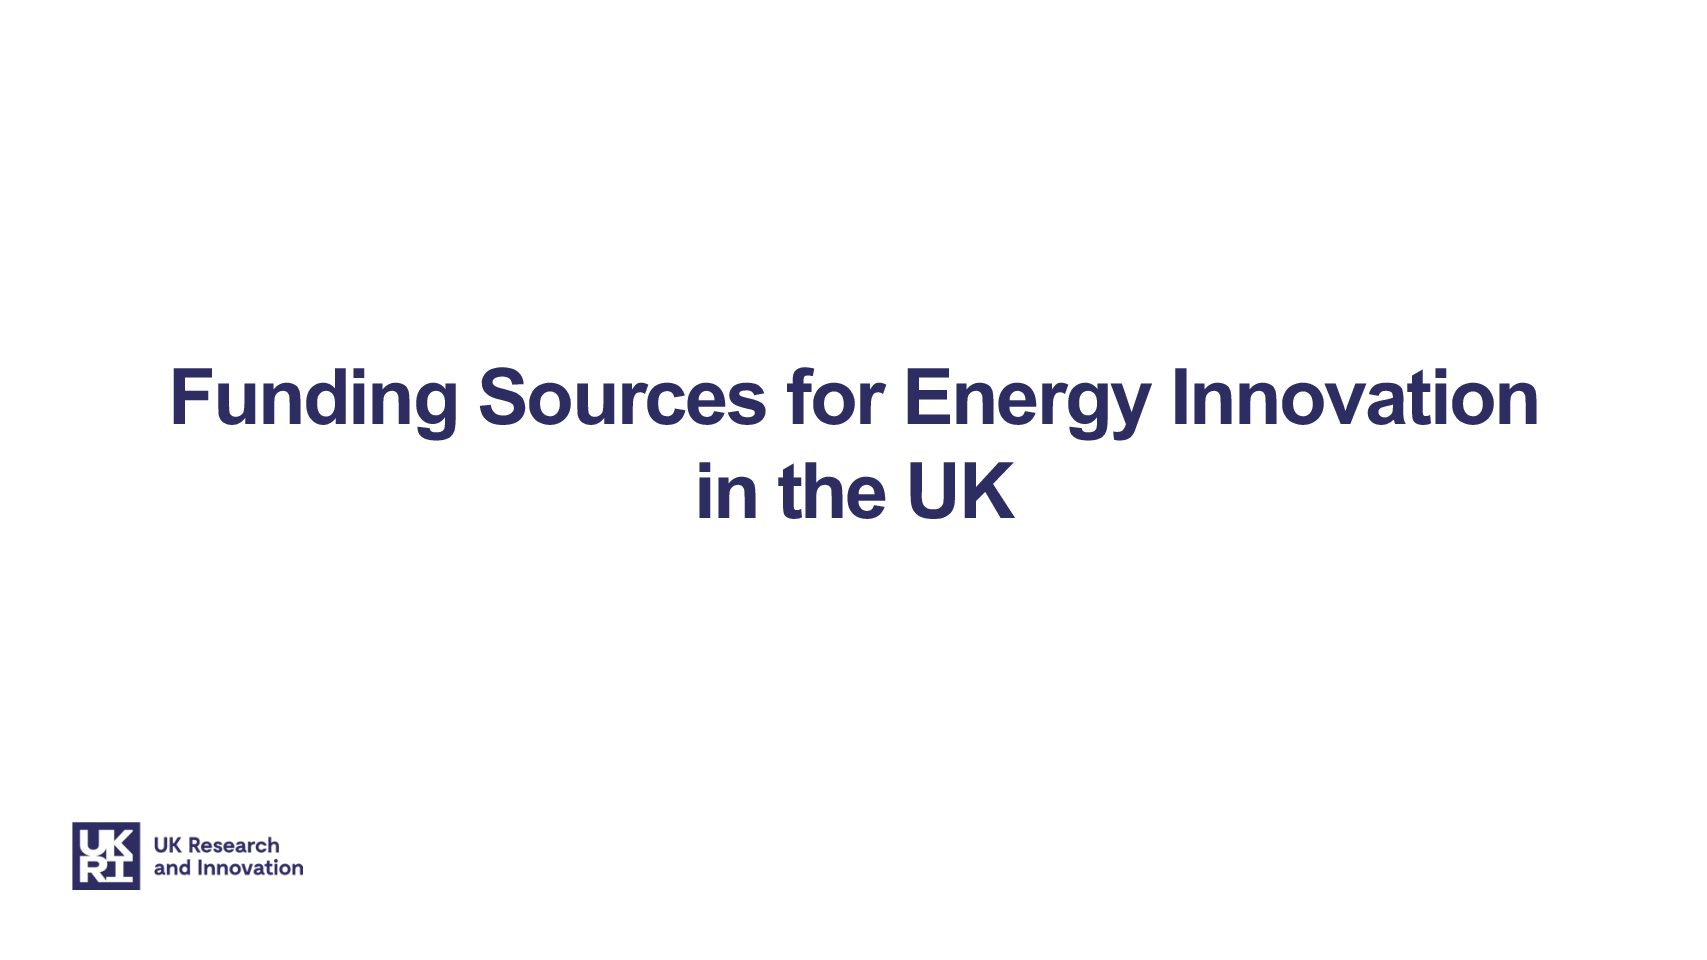 Energy related funding opportunities for UK organisations